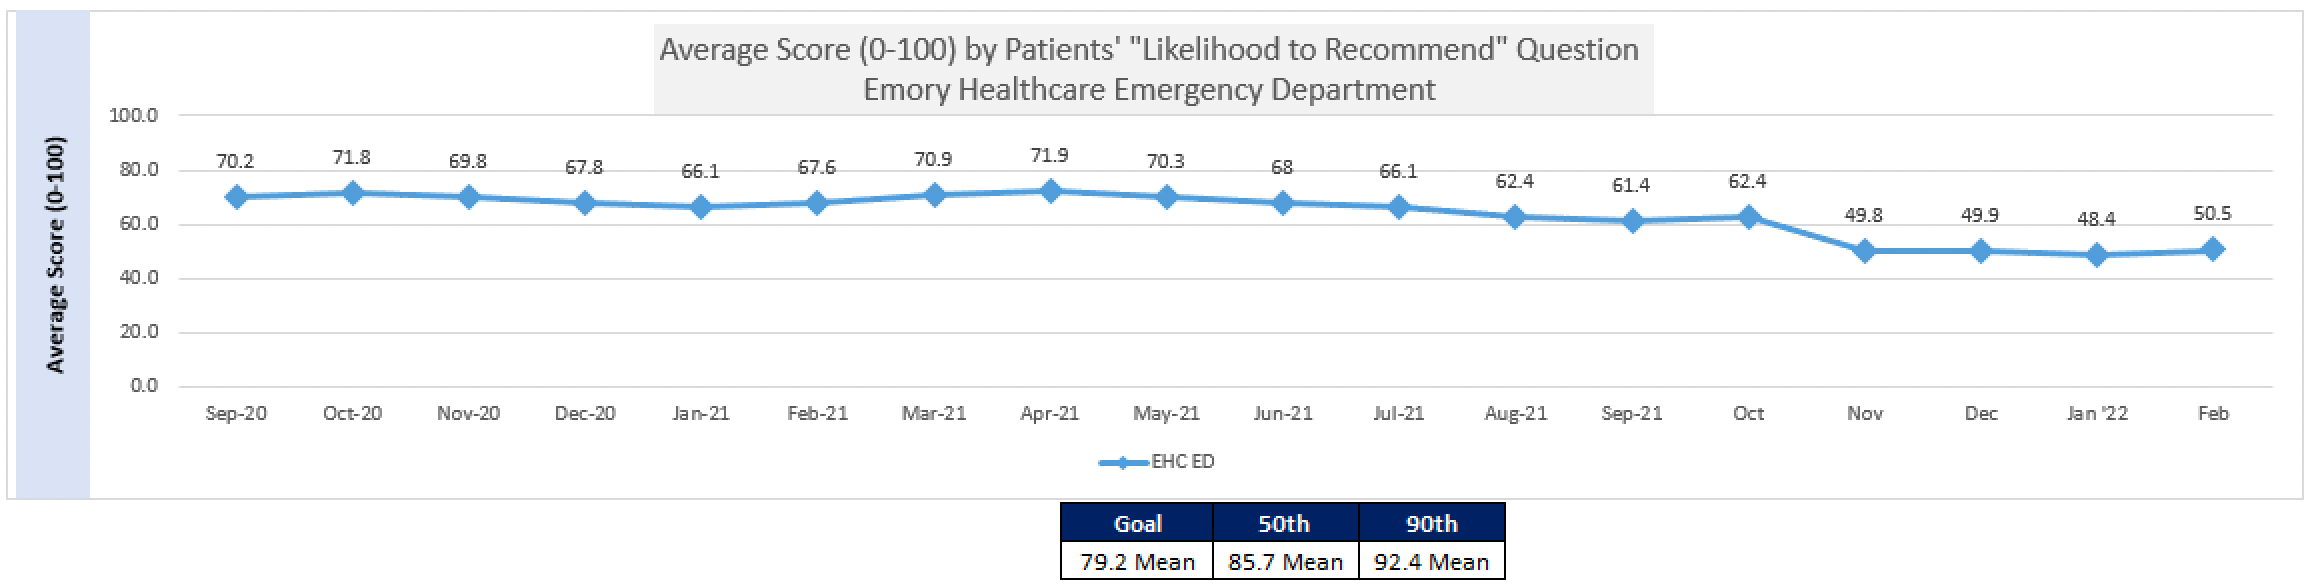 EHC患者满意度趋势数据